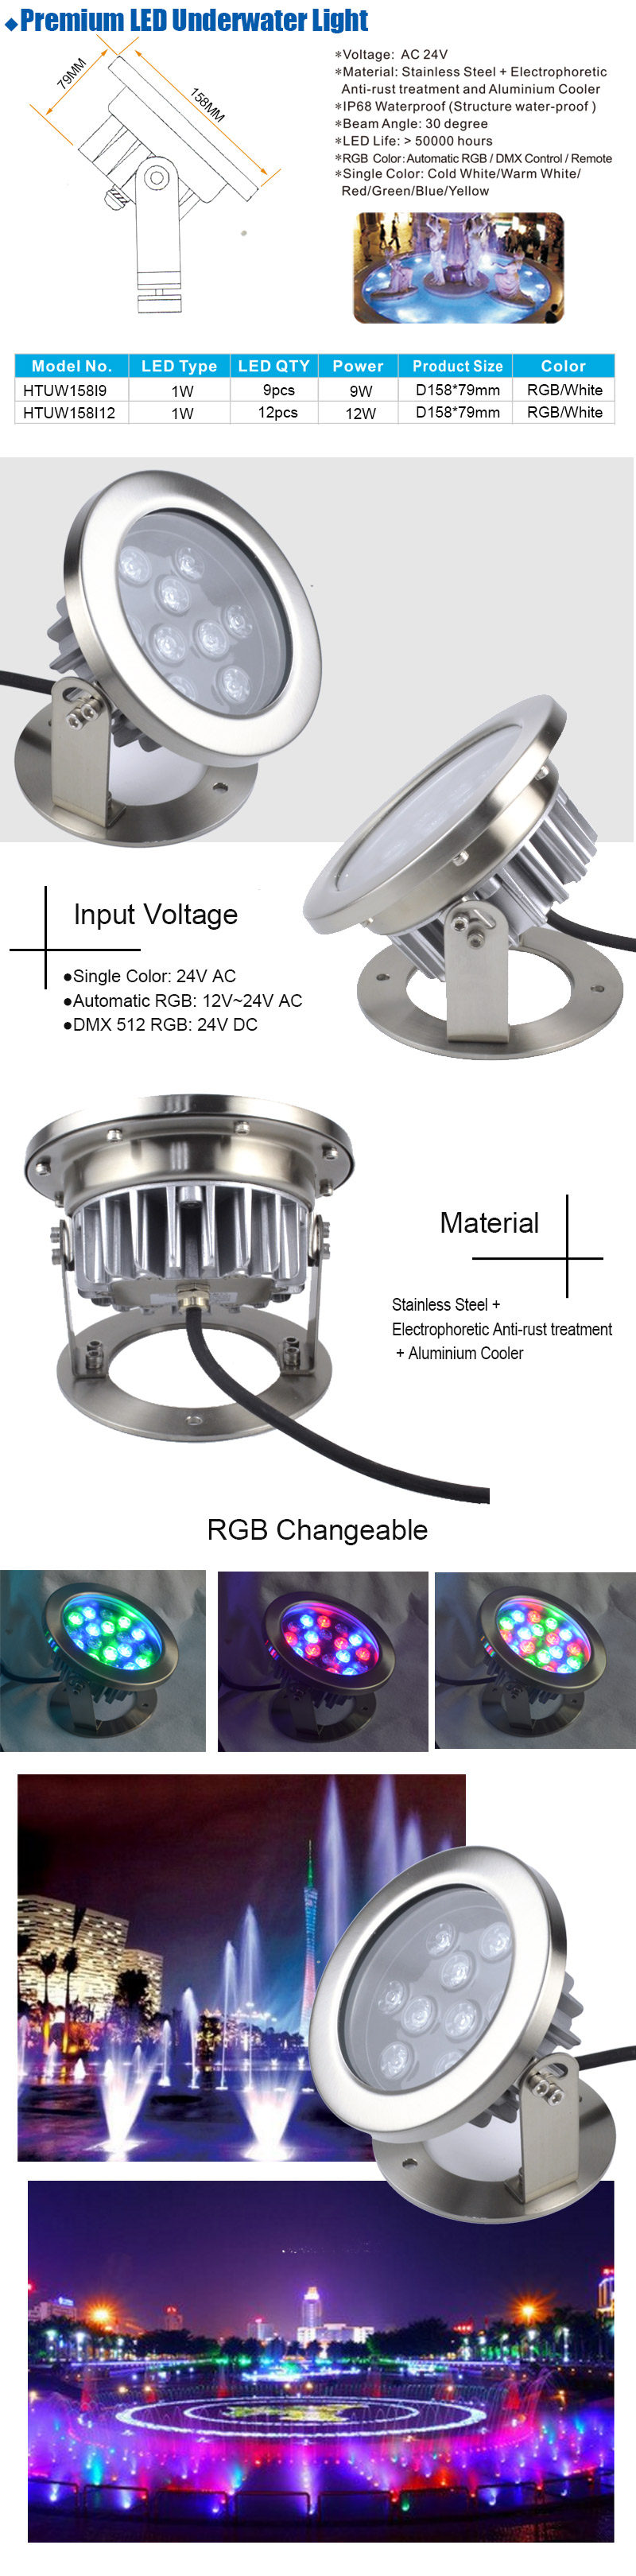 Premium 9W Stainless Steel High Power RGB LED Underwater Light With Radiator 